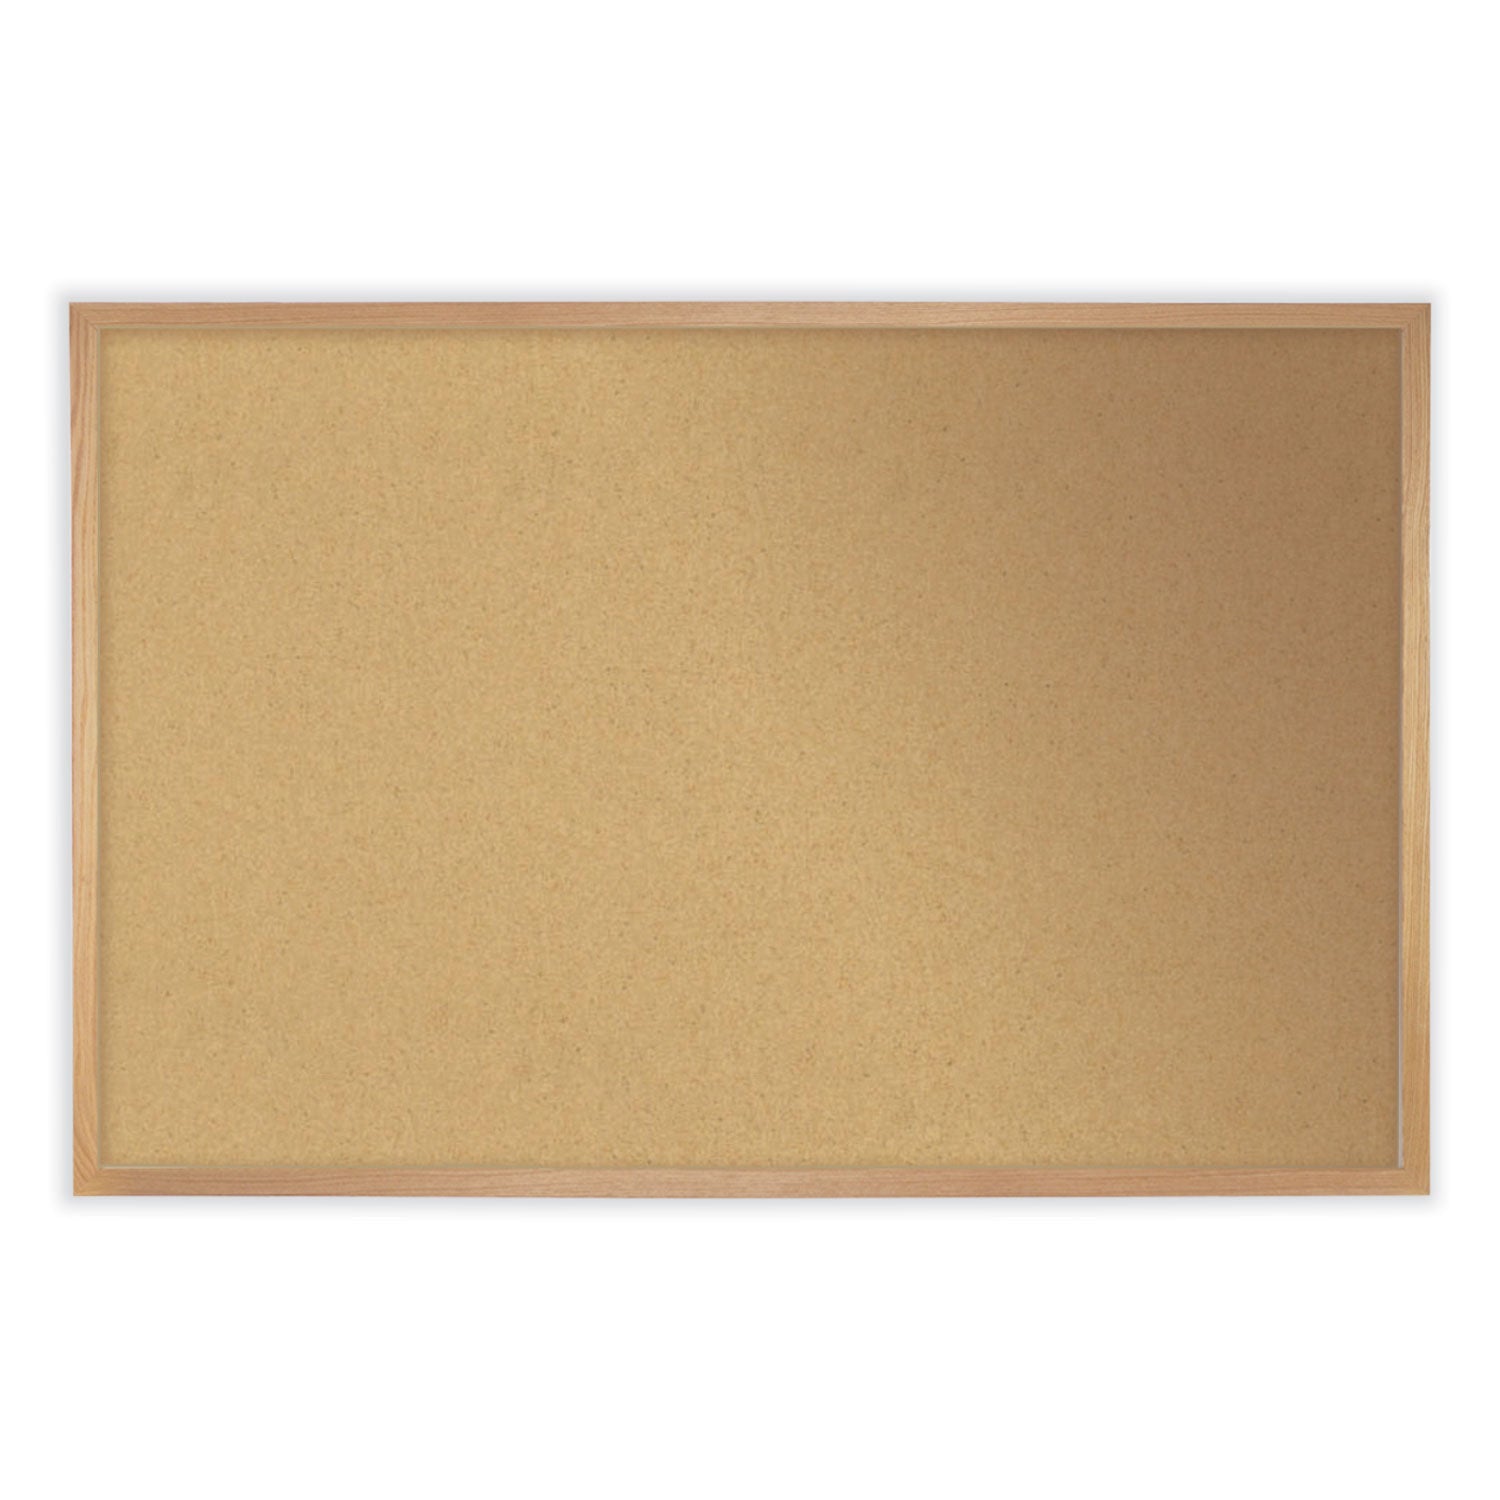 natural-cork-bulletin-board-with-frame-485-x-485-tan-surface-oak-frame-ships-in-7-10-business-days_ghewk44 - 1